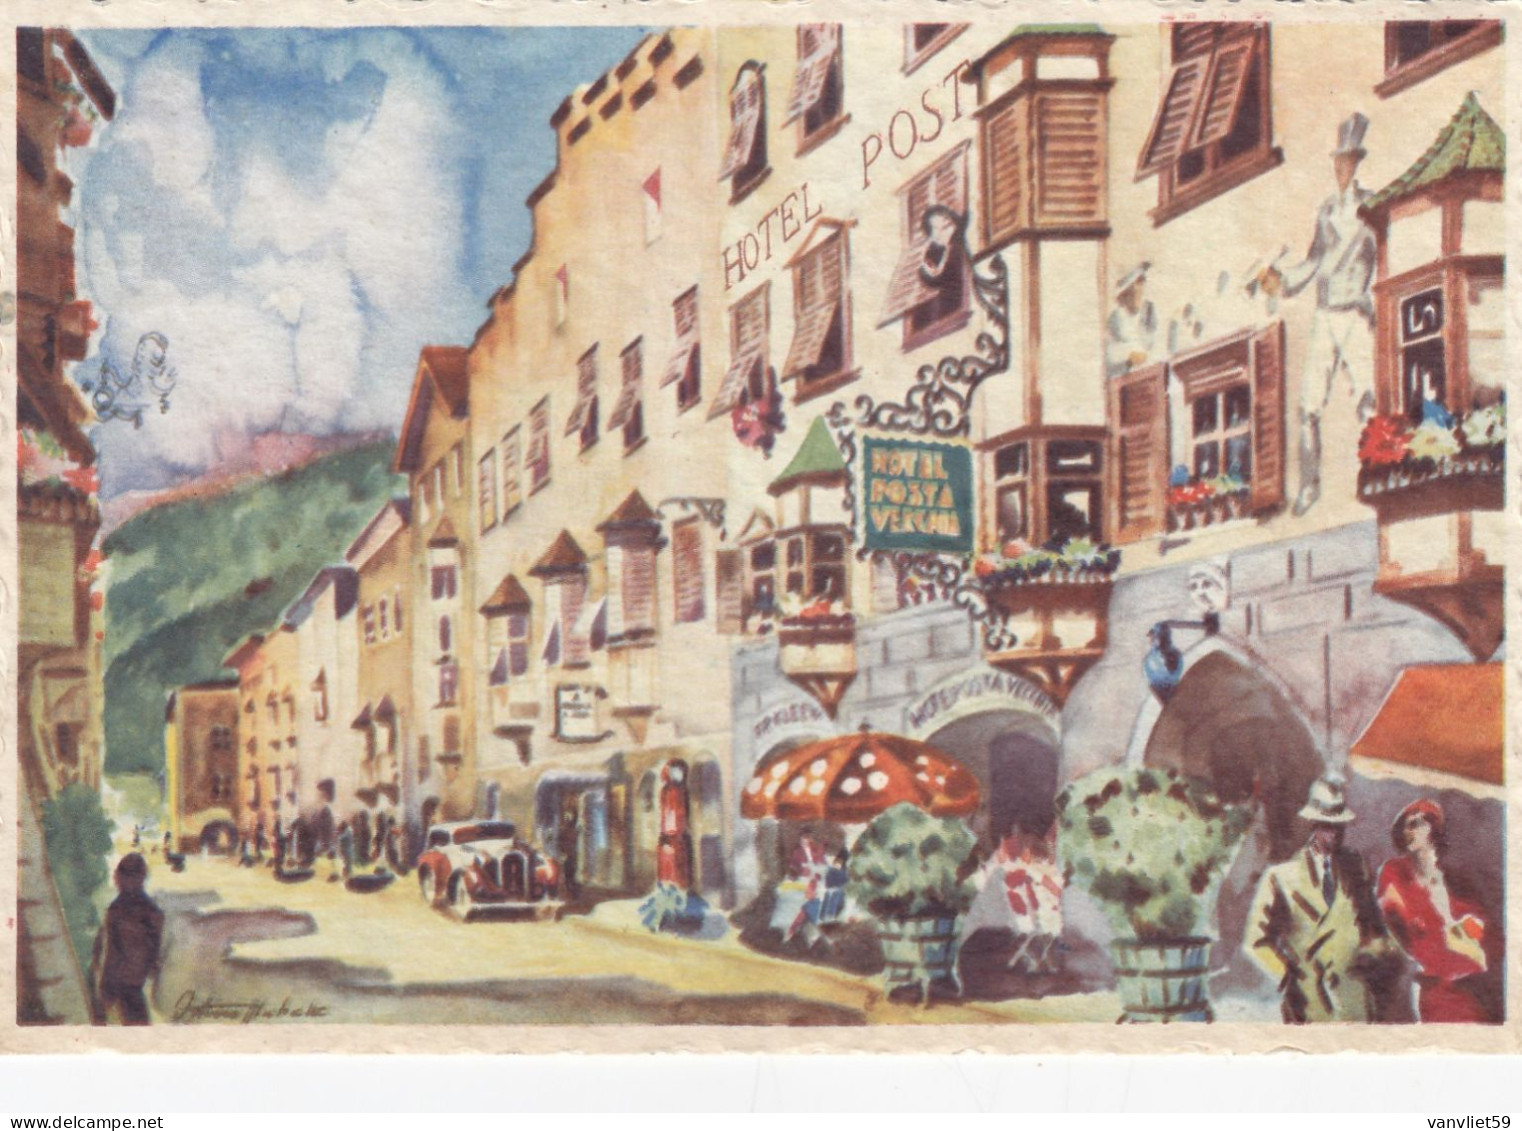 VIPITENO-STERZING-BOZEN-BOLZANO-HOTEL CENTRALE =POSTA VECCHIA=- CARTOLINA  CARTA GOFFRATA-VIAGG. IL 19-8-1935 - Bolzano (Bozen)